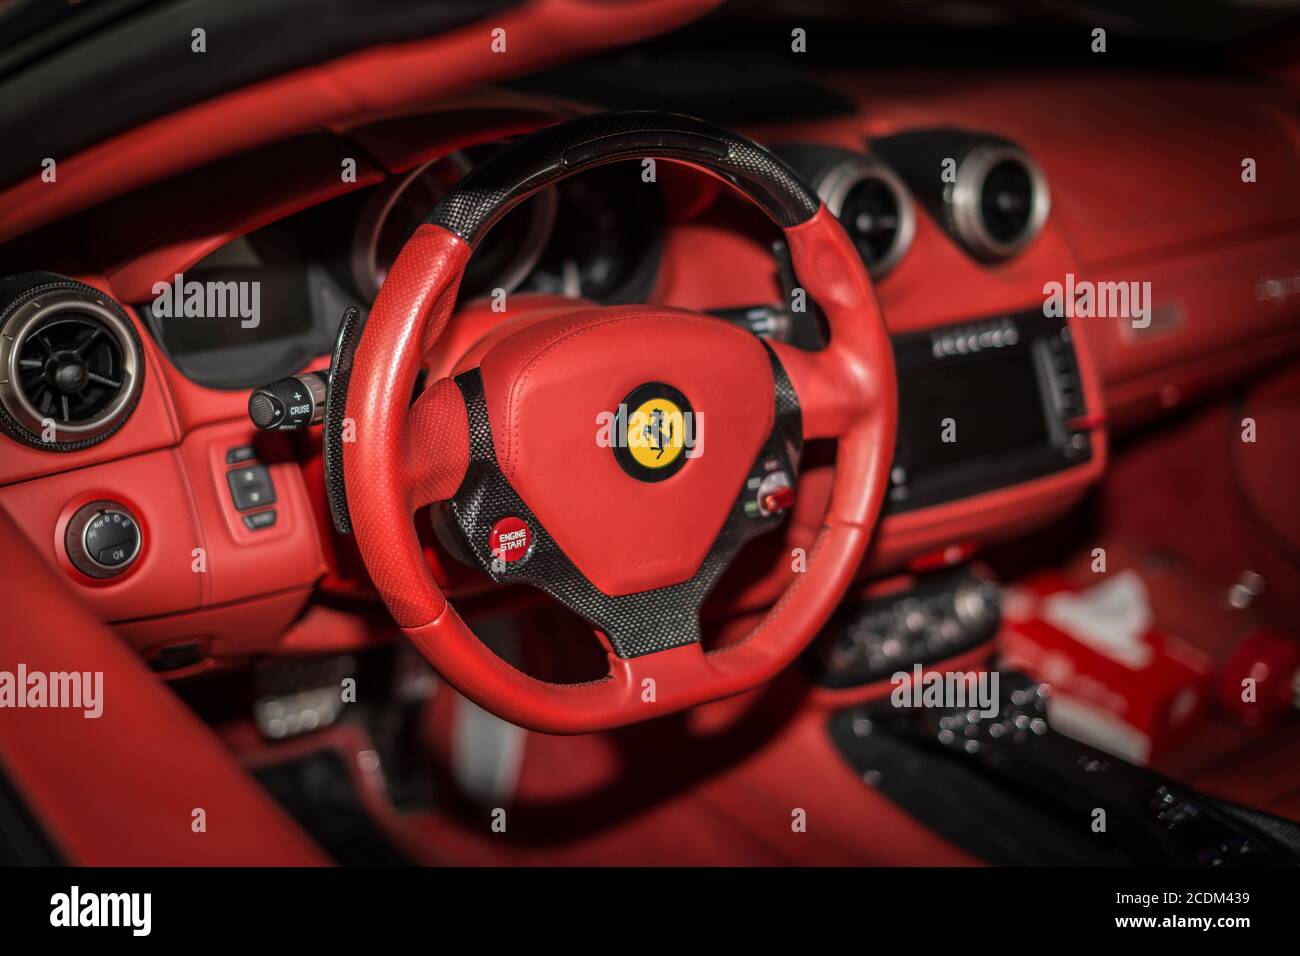 Ferrari F12 Berlinetta V12 GT sports car red dashboard interior shot  showing the driving wheel in focus Stock Photo - Alamy